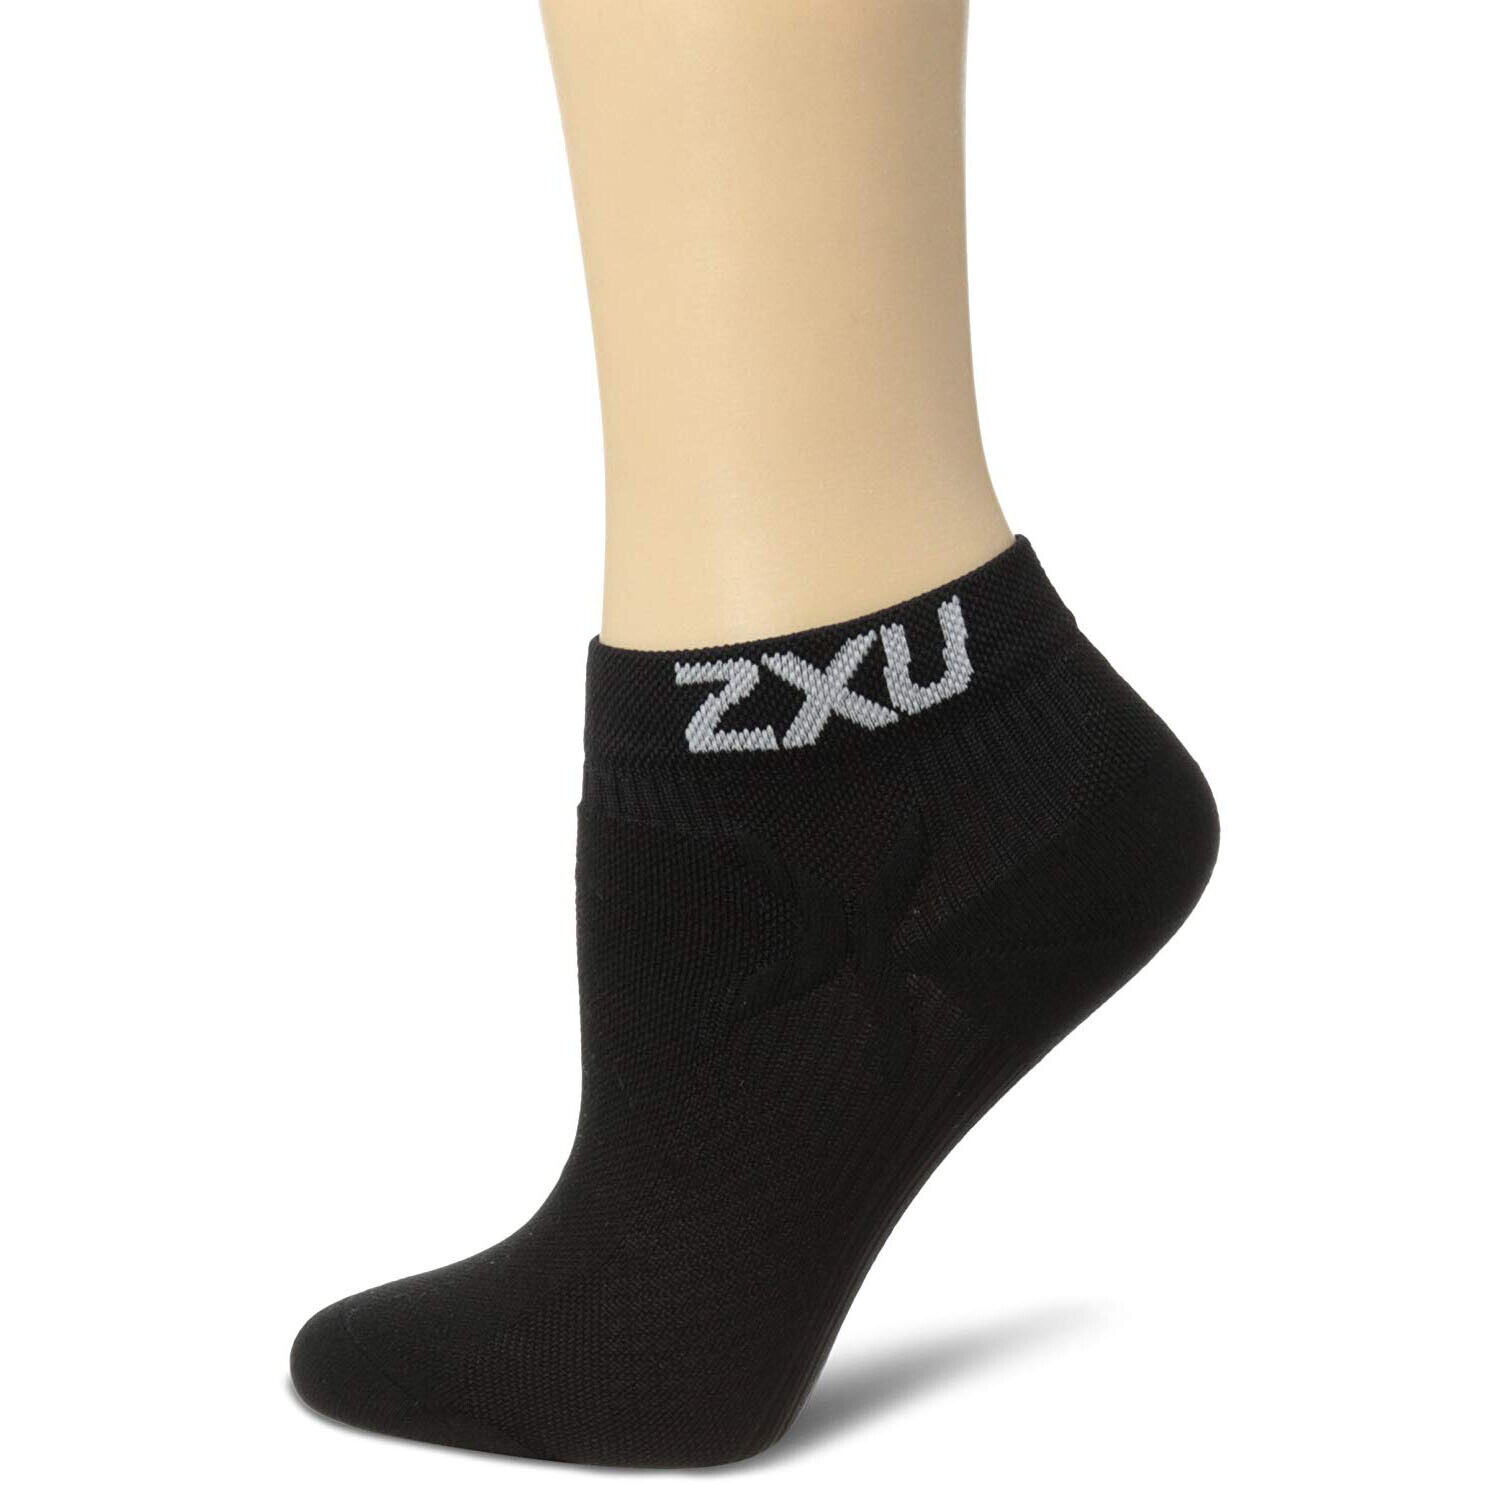 New 2xu Women's Performance Low Rise Sock